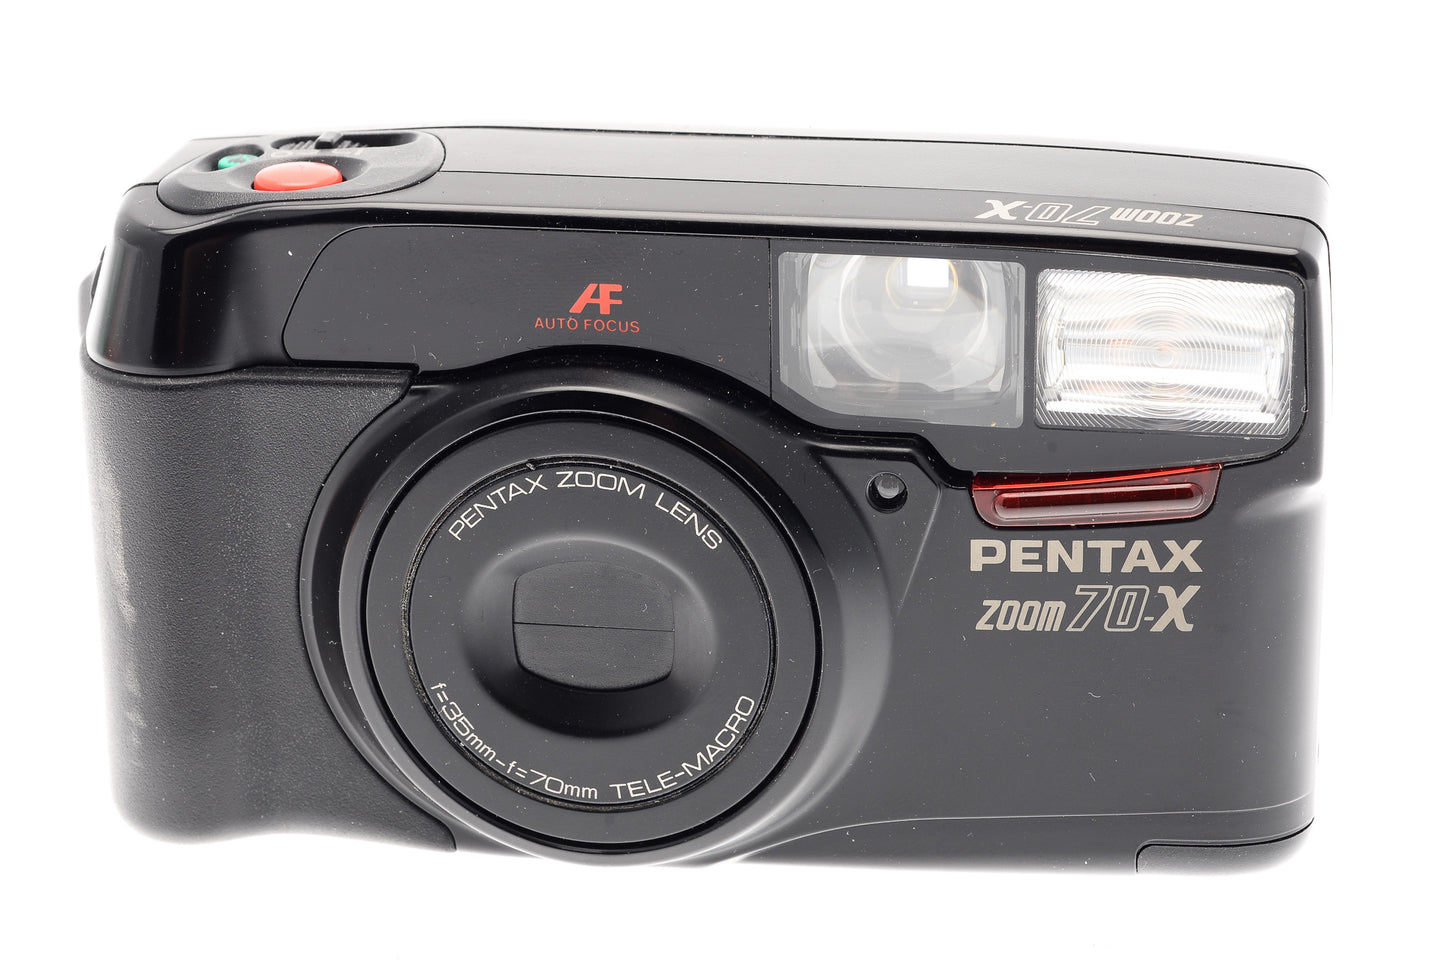 Pentax Zoom 70-X - Camera